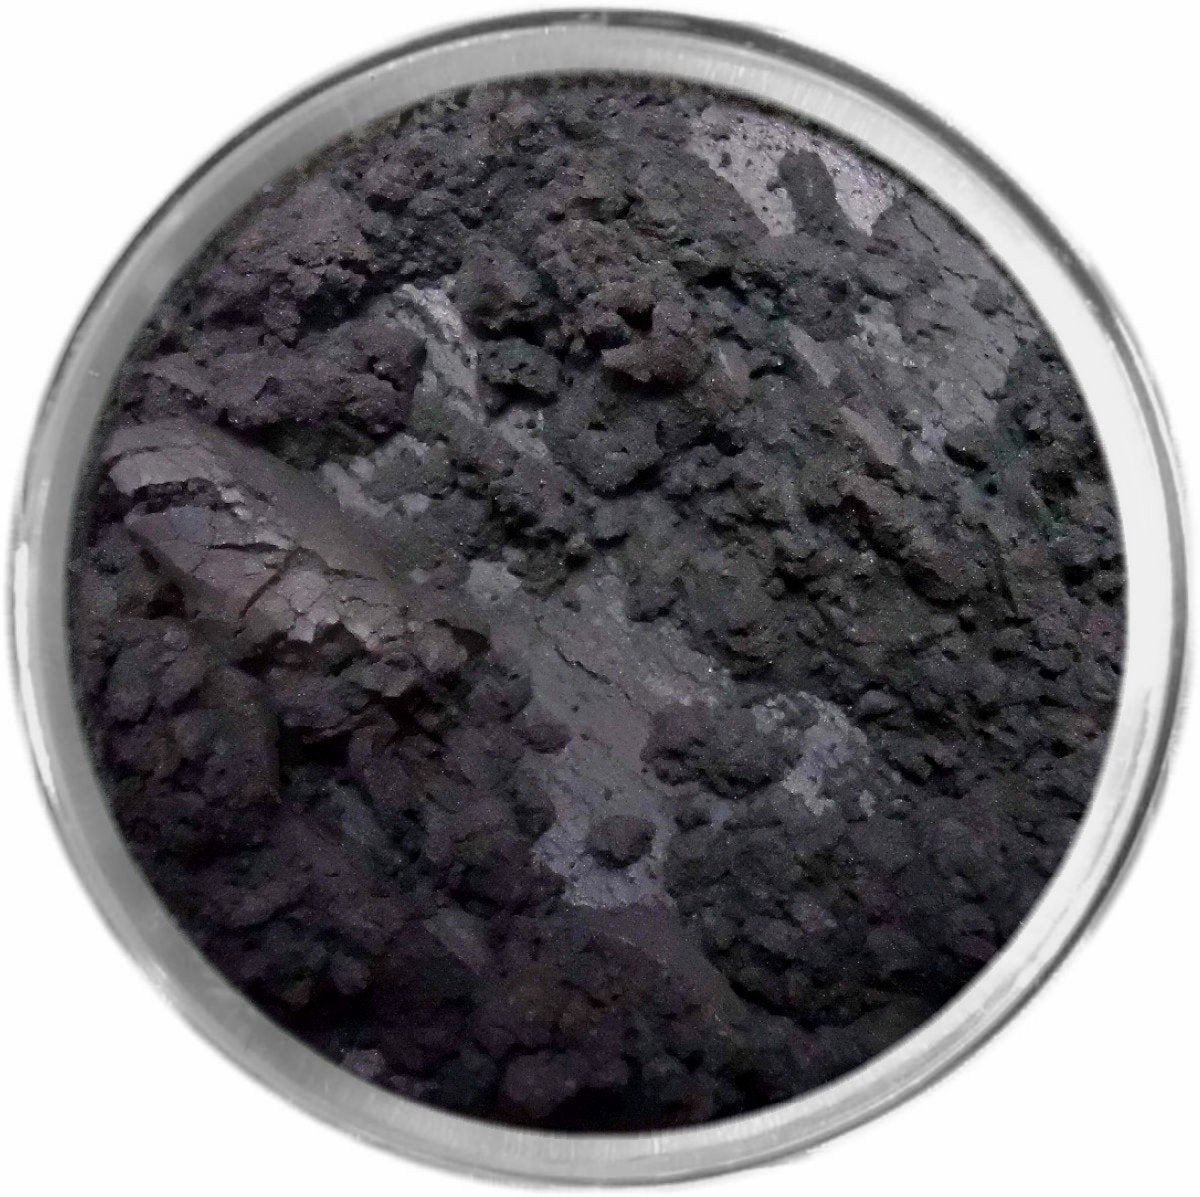 QUIET STORM Multi-Use Loose Mineral Powder Pigment Color Loose Mineral Multi-Use Colors M*A*D Minerals Makeup 